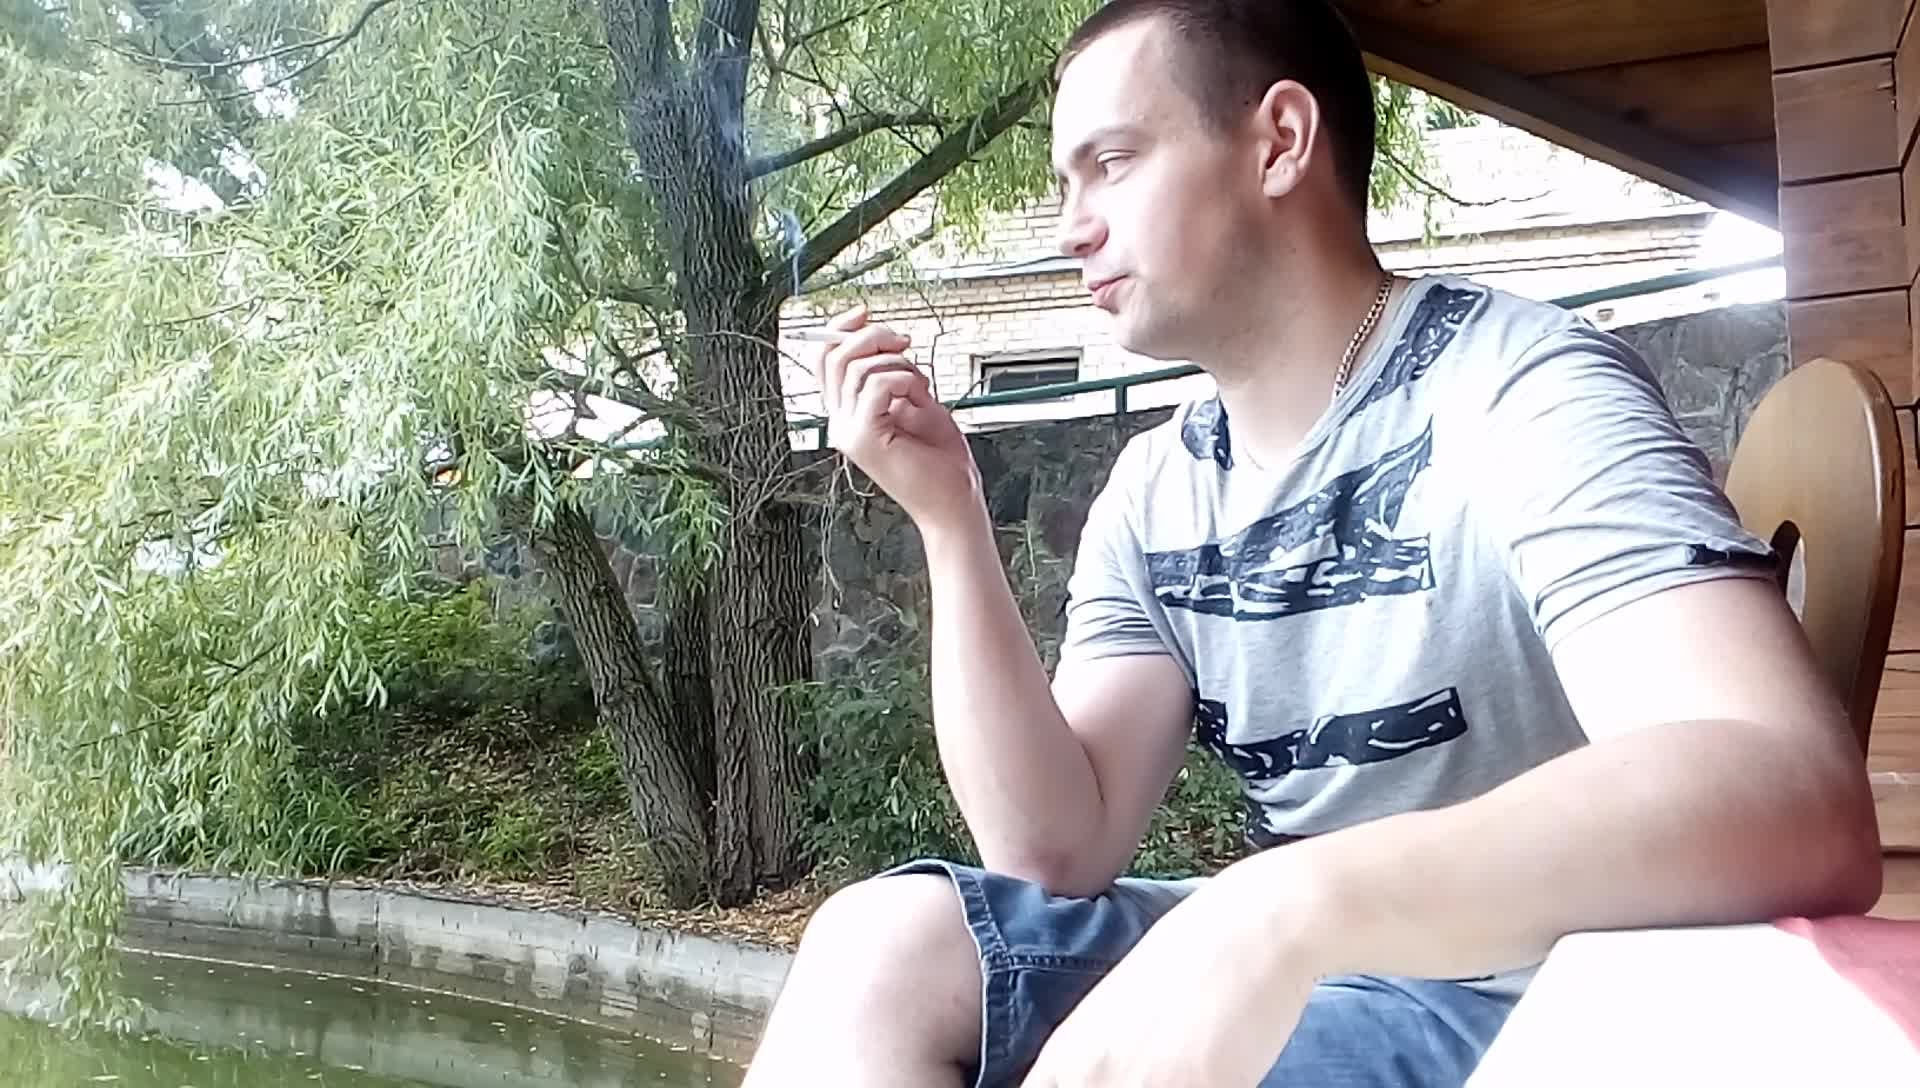 alex smoking [***] beer and fishing